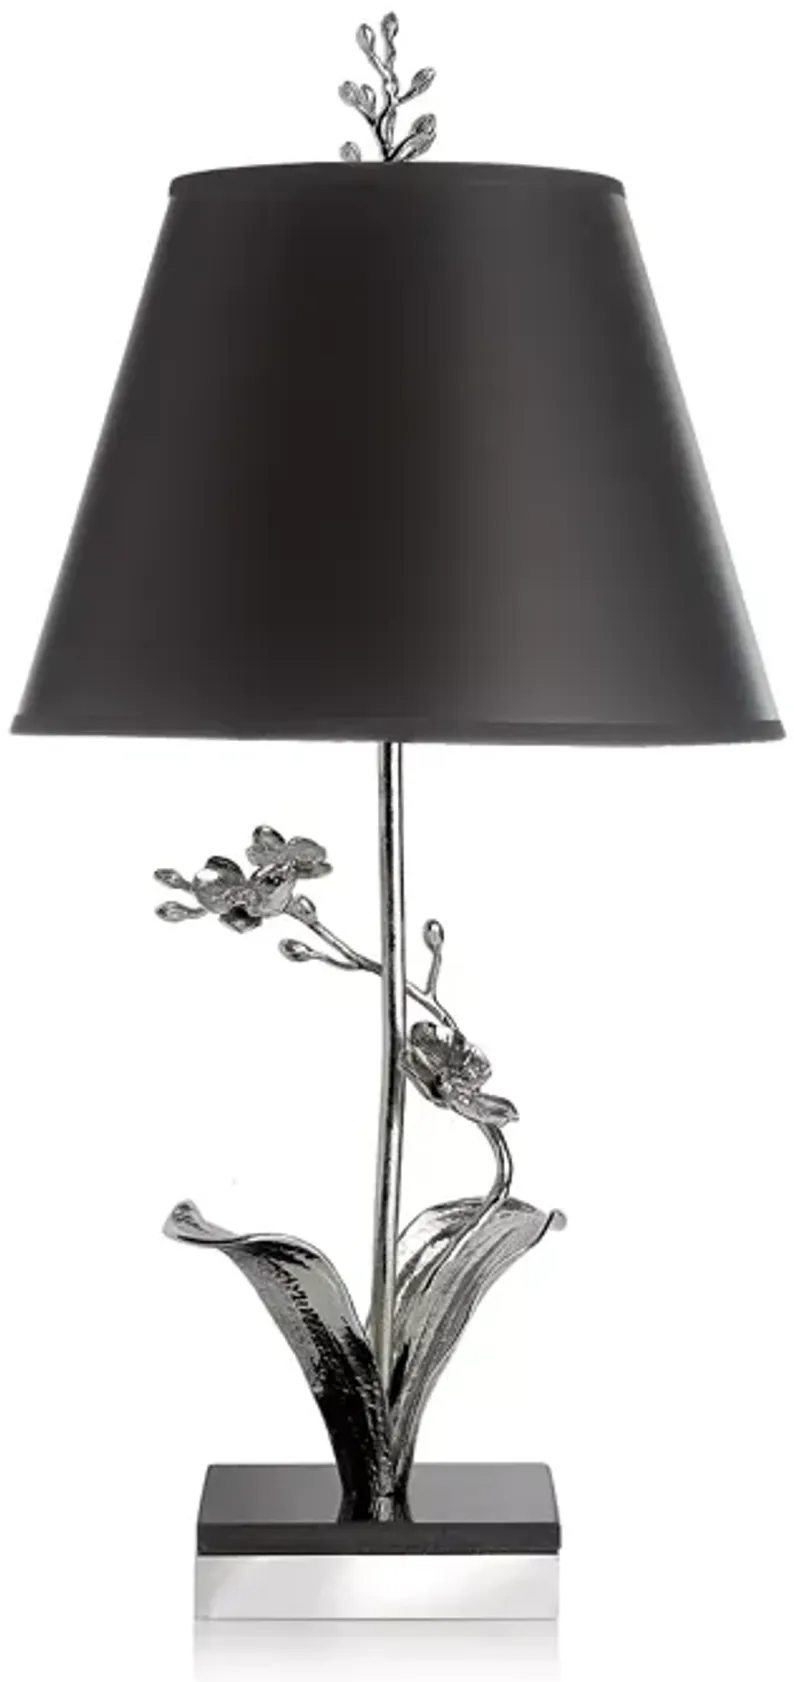 Michael Aram Orchid Table Lamp